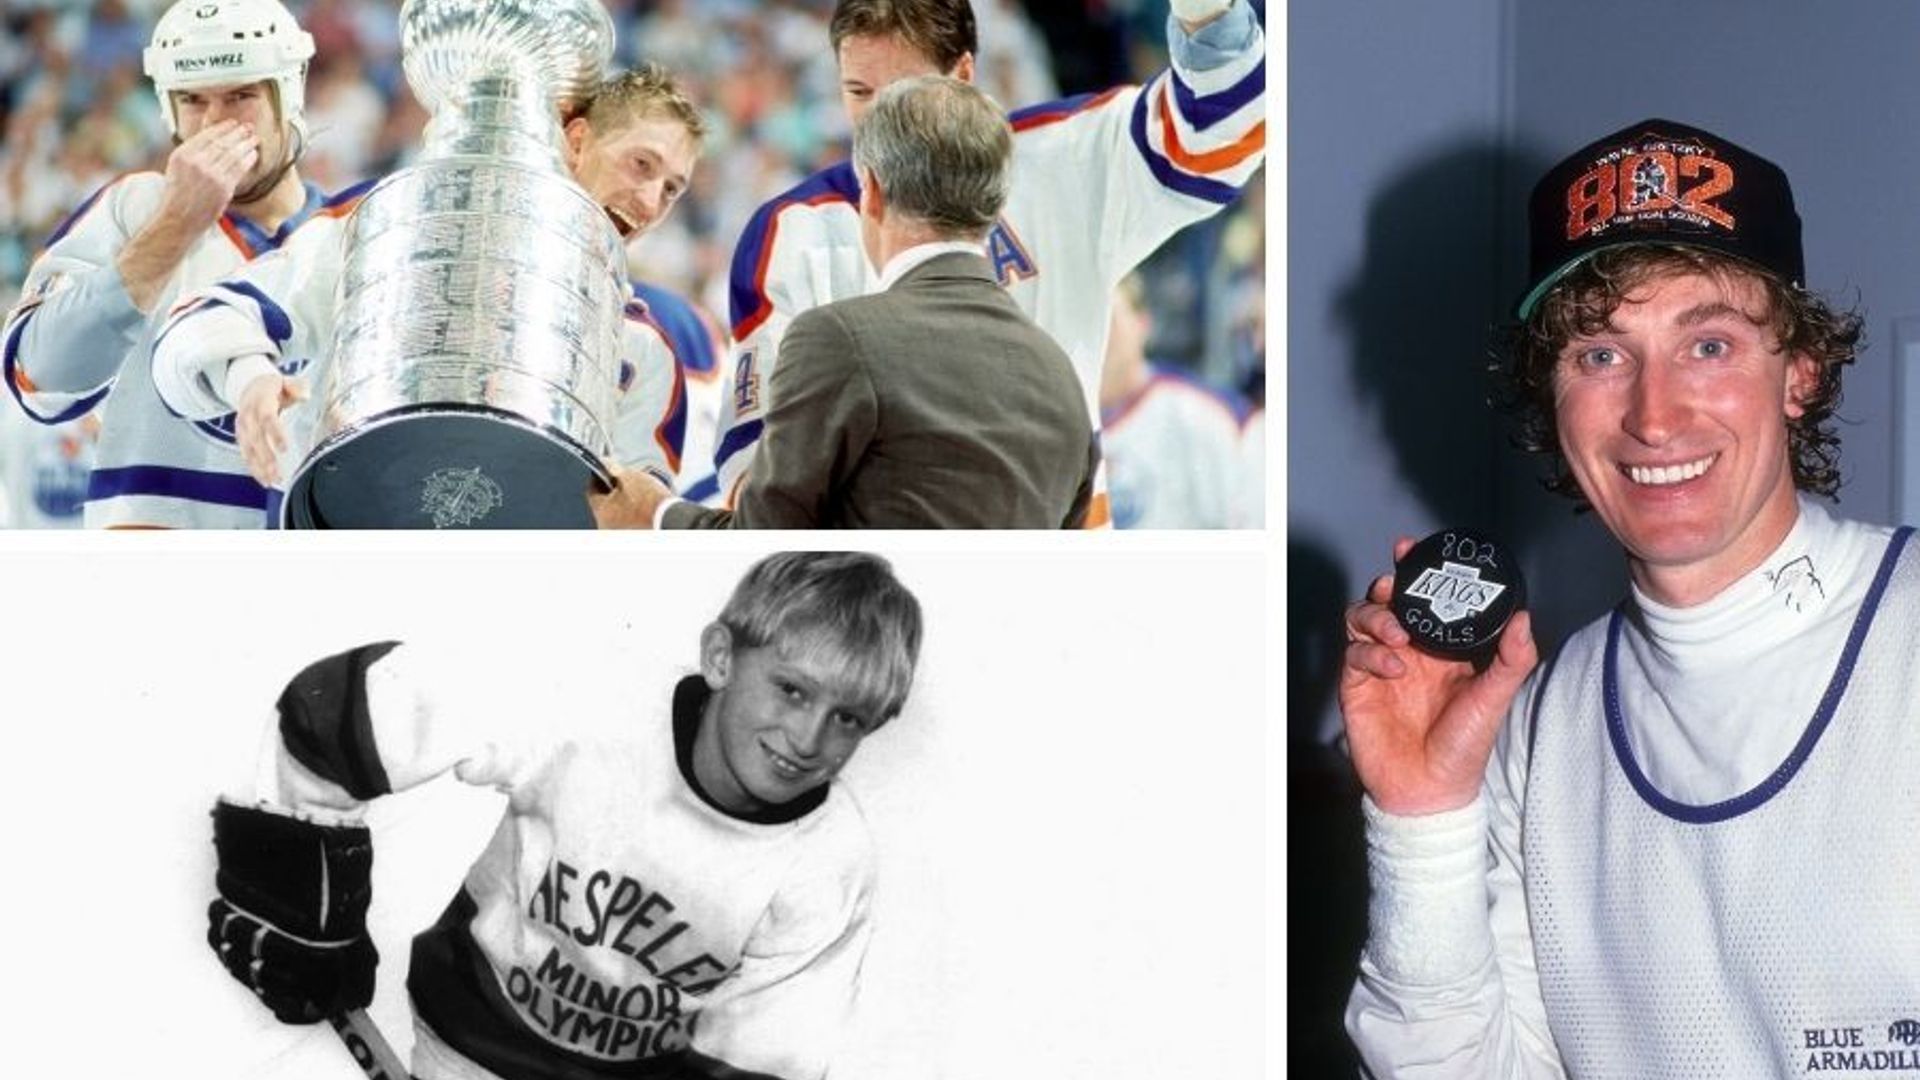 Canadian Hockey League on X: 60 years of greatness #waynegretzky